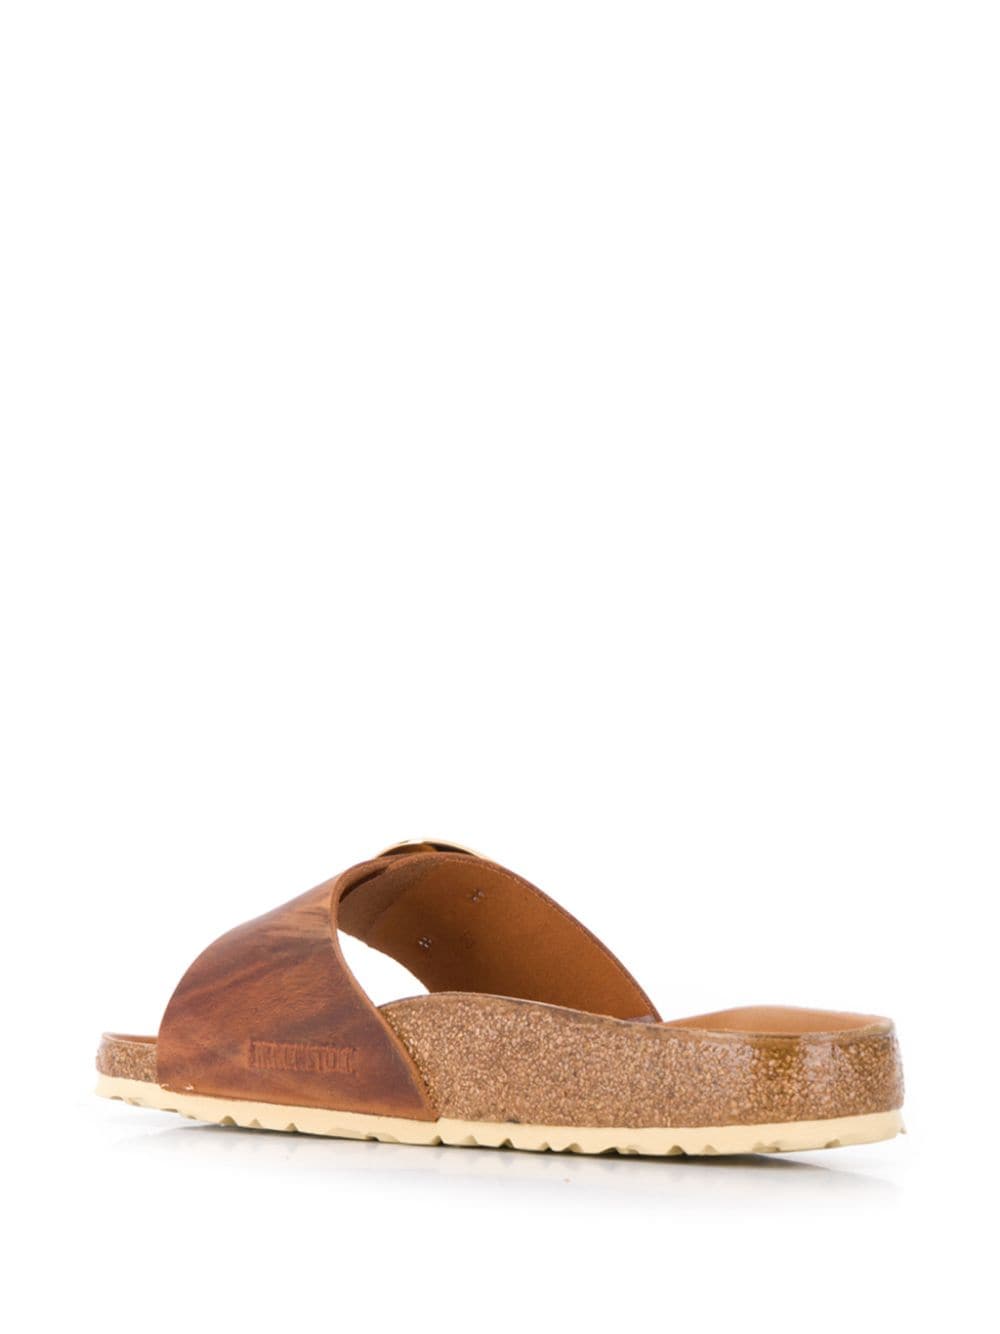 Birkenstock Sandals Leather Brown